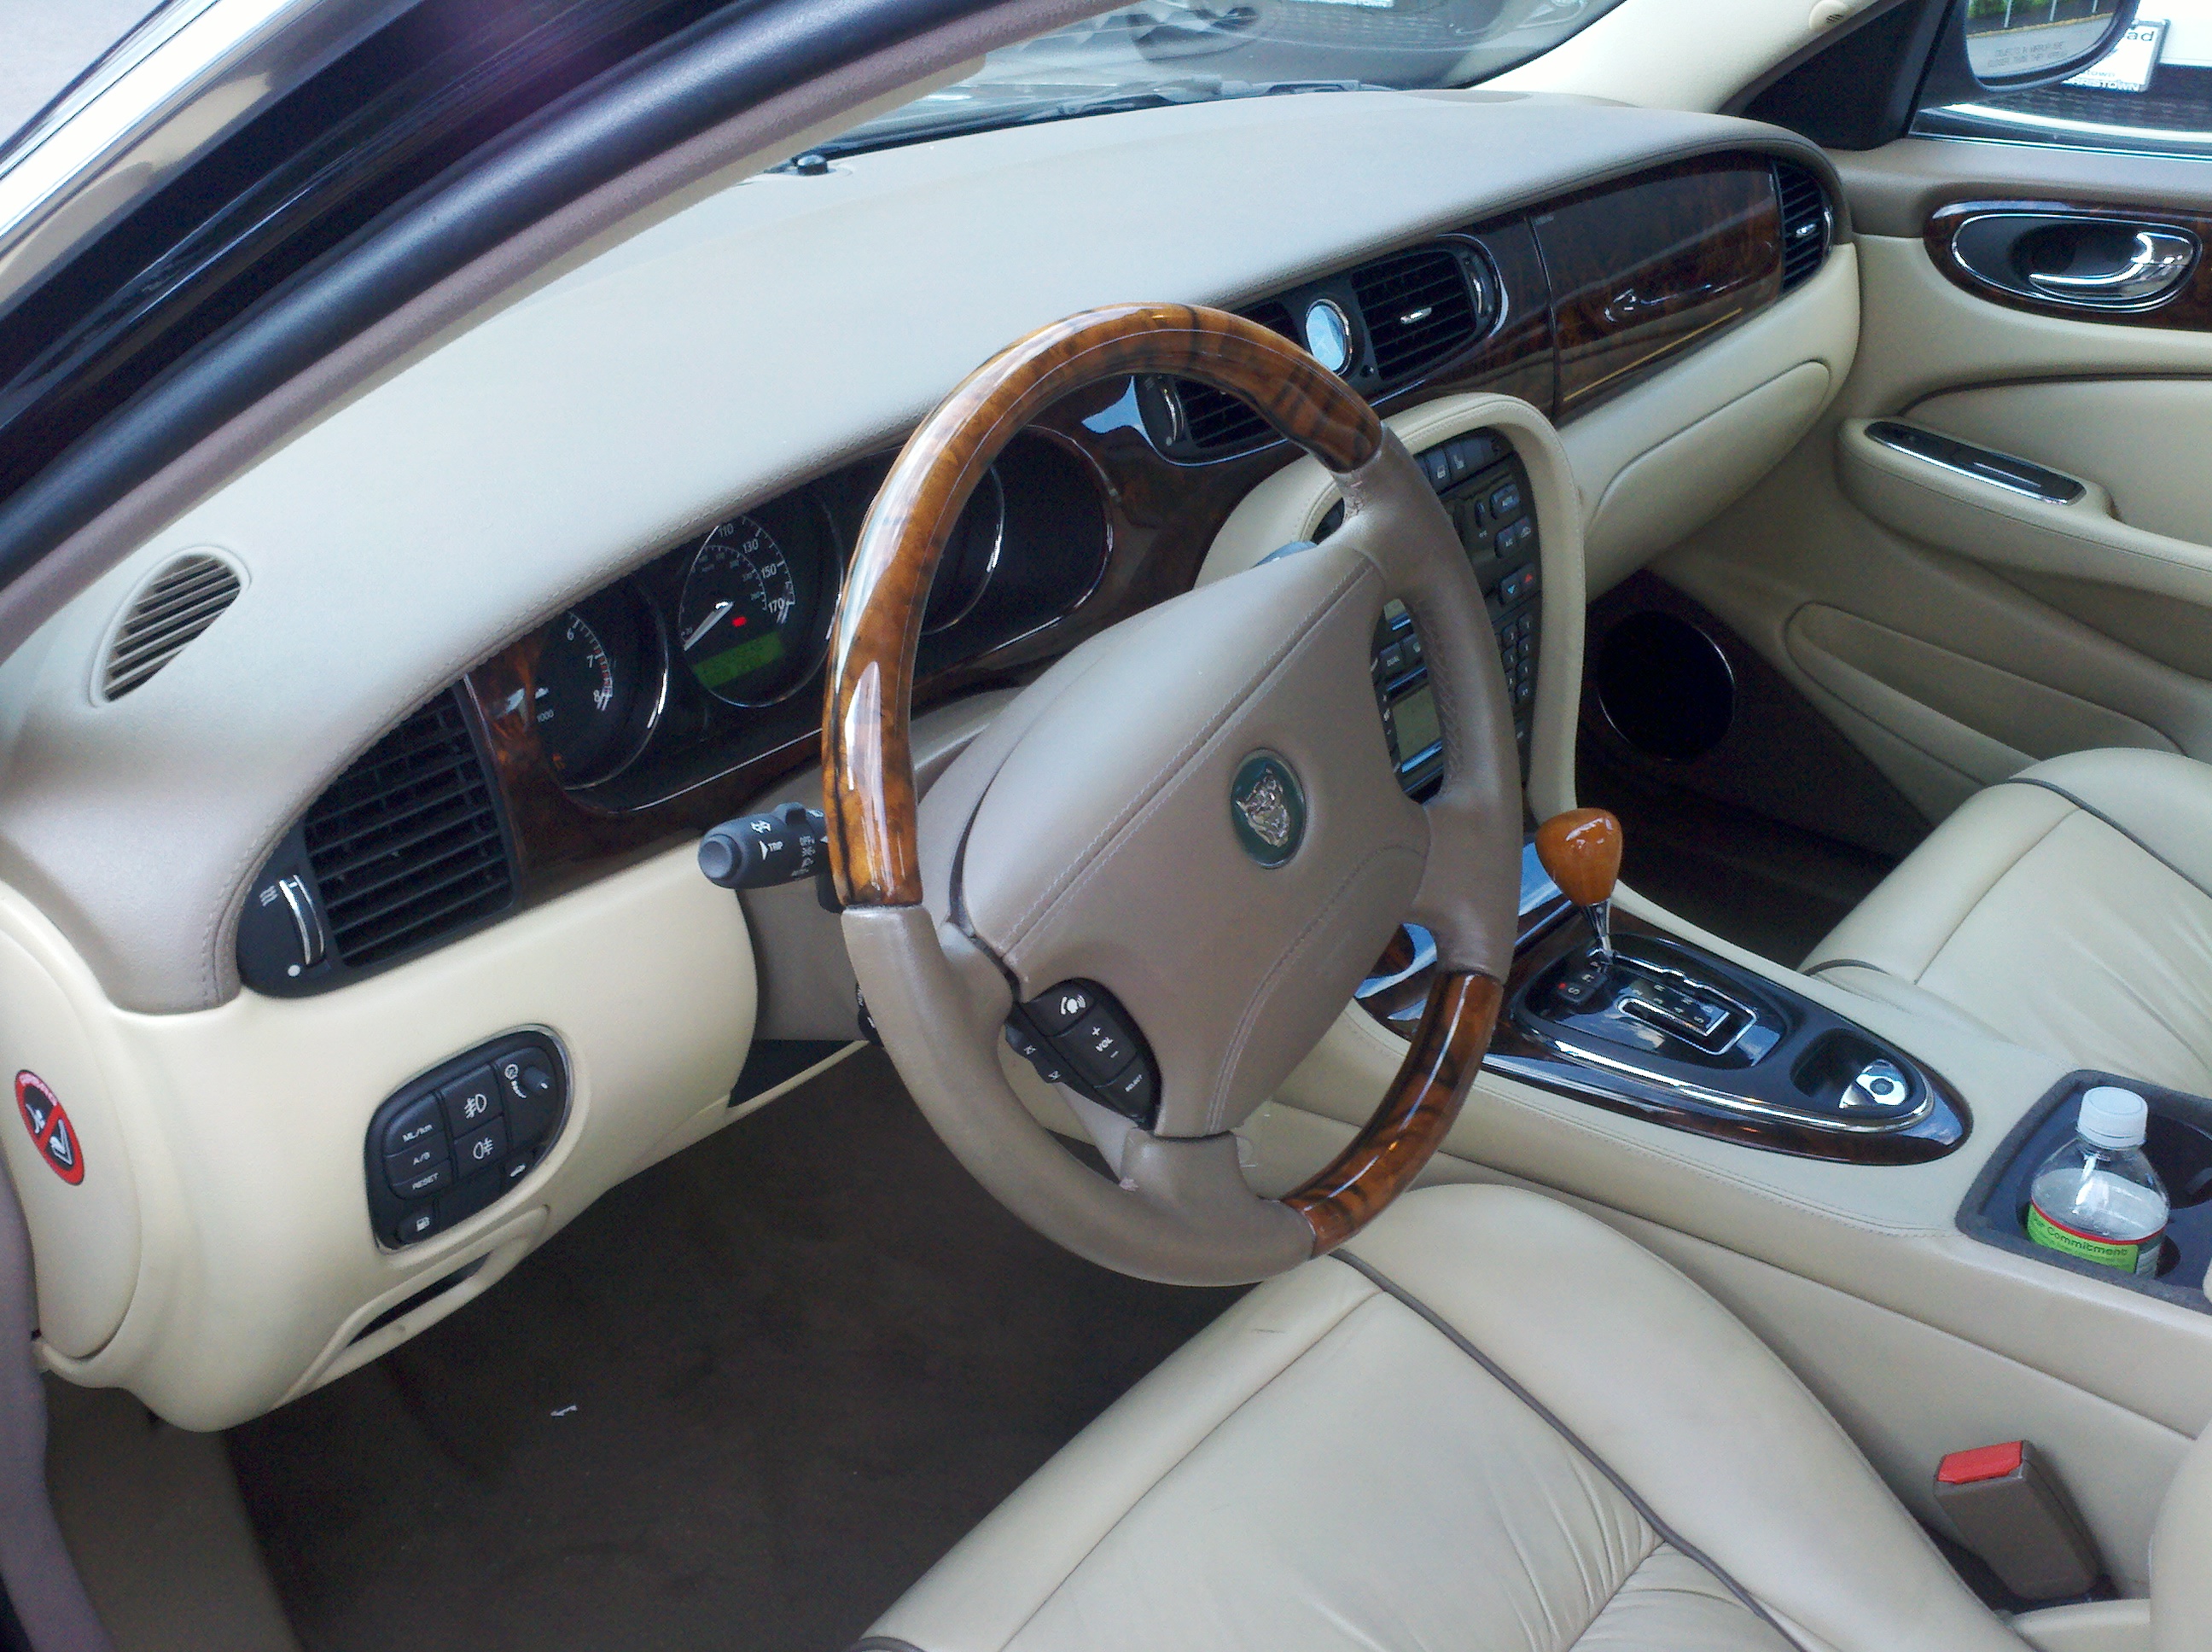 Test Driven: 2005 Jaguar XJ Vanden Plas | Mind Over Motor